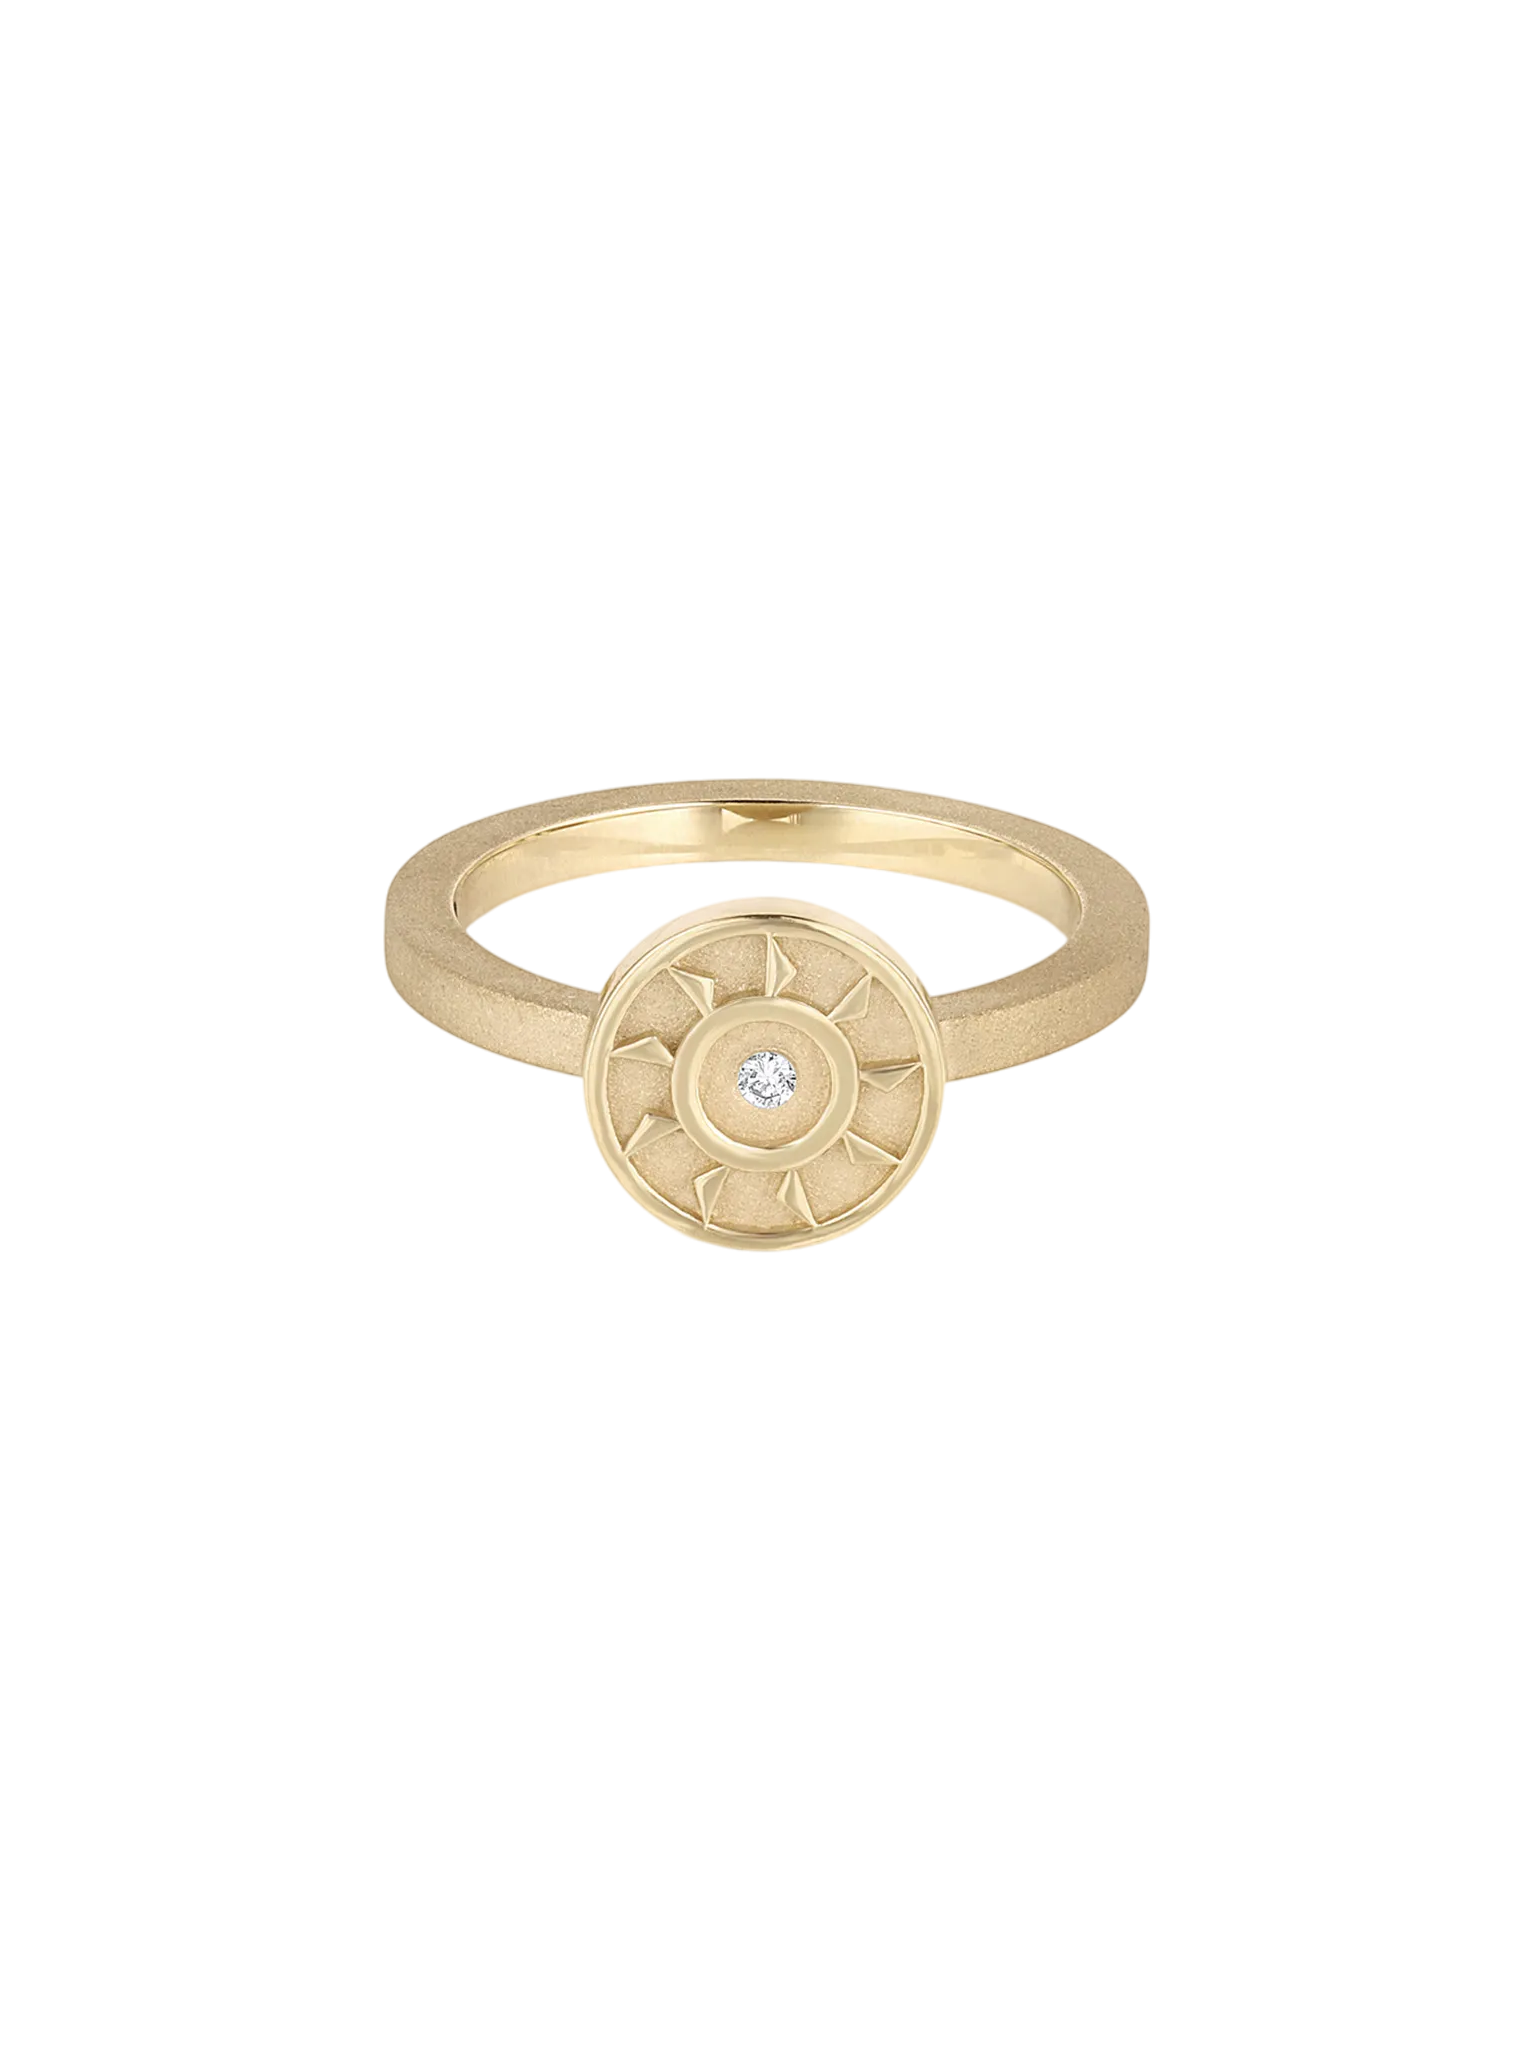 Ennead ring with white diamond